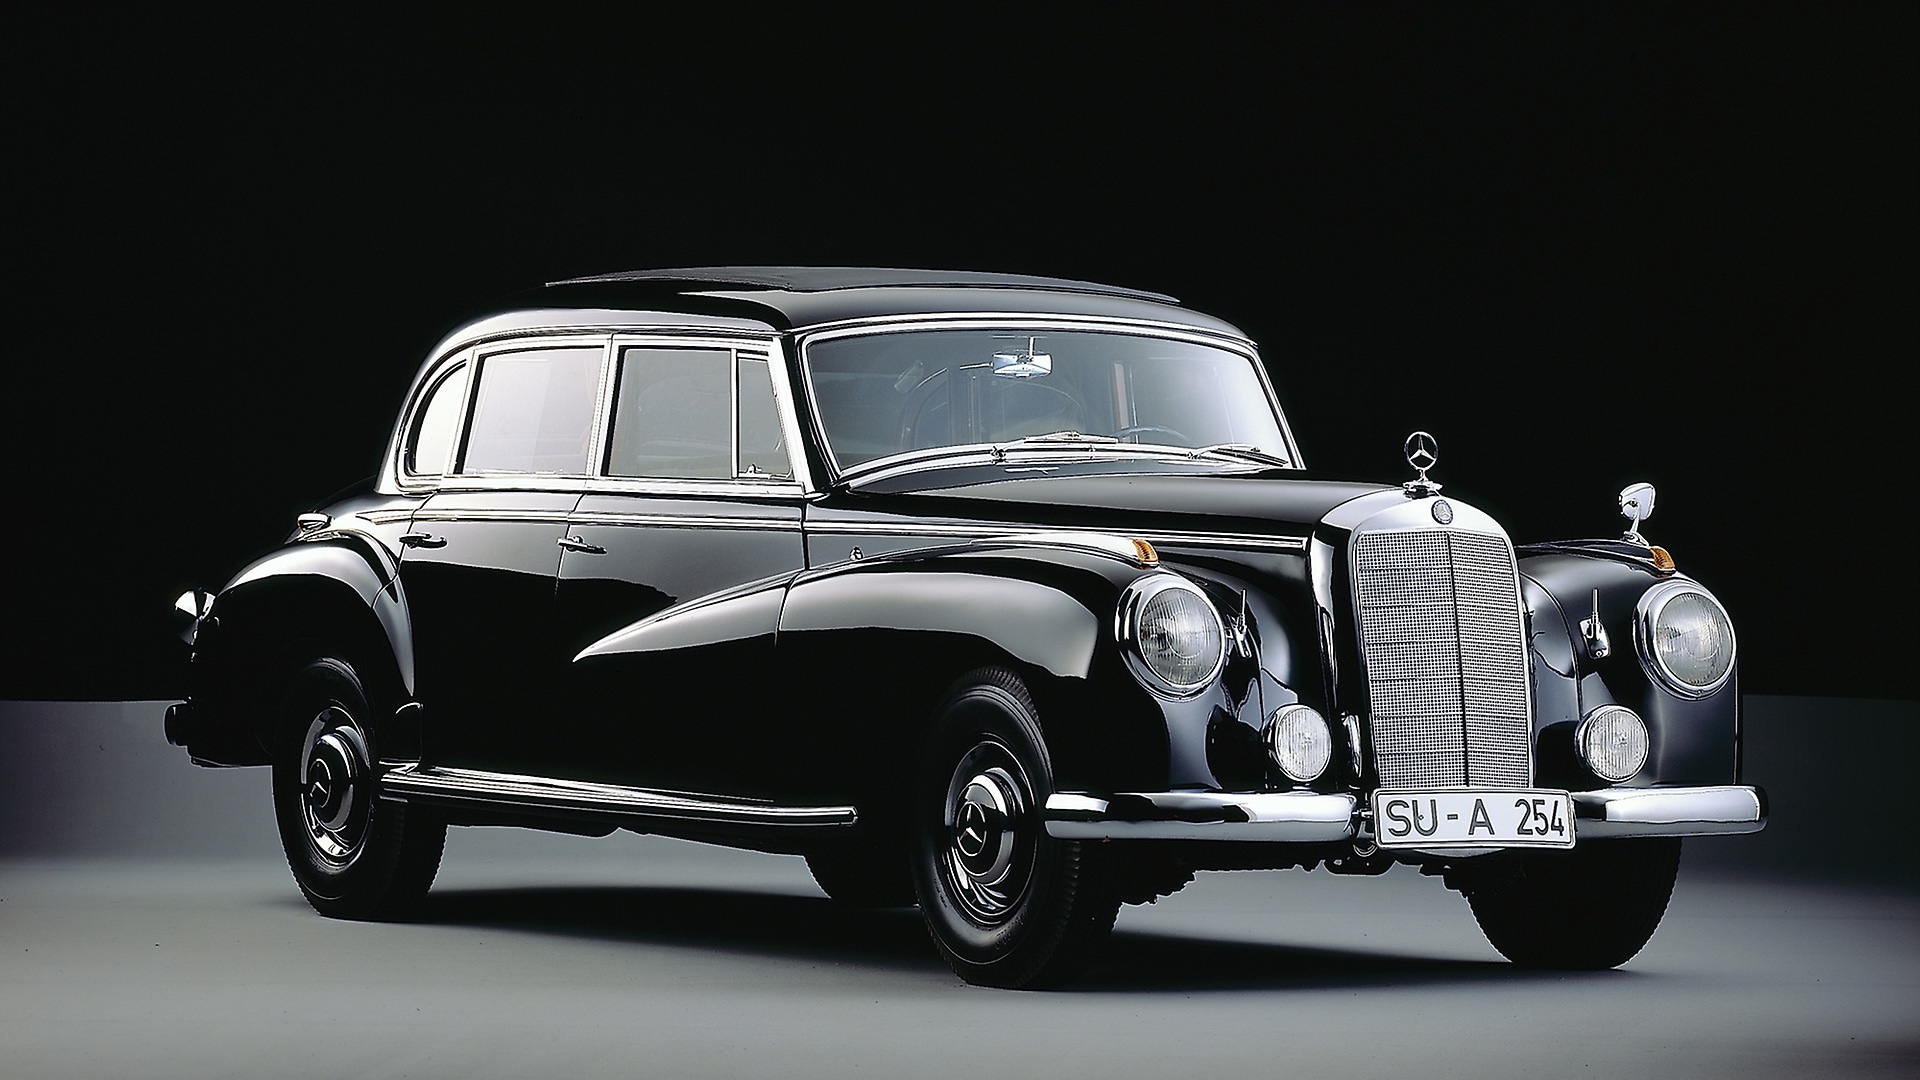 Mercedes-Benz model 300 sedan, 1952, the official car of Konrad Adenauer.